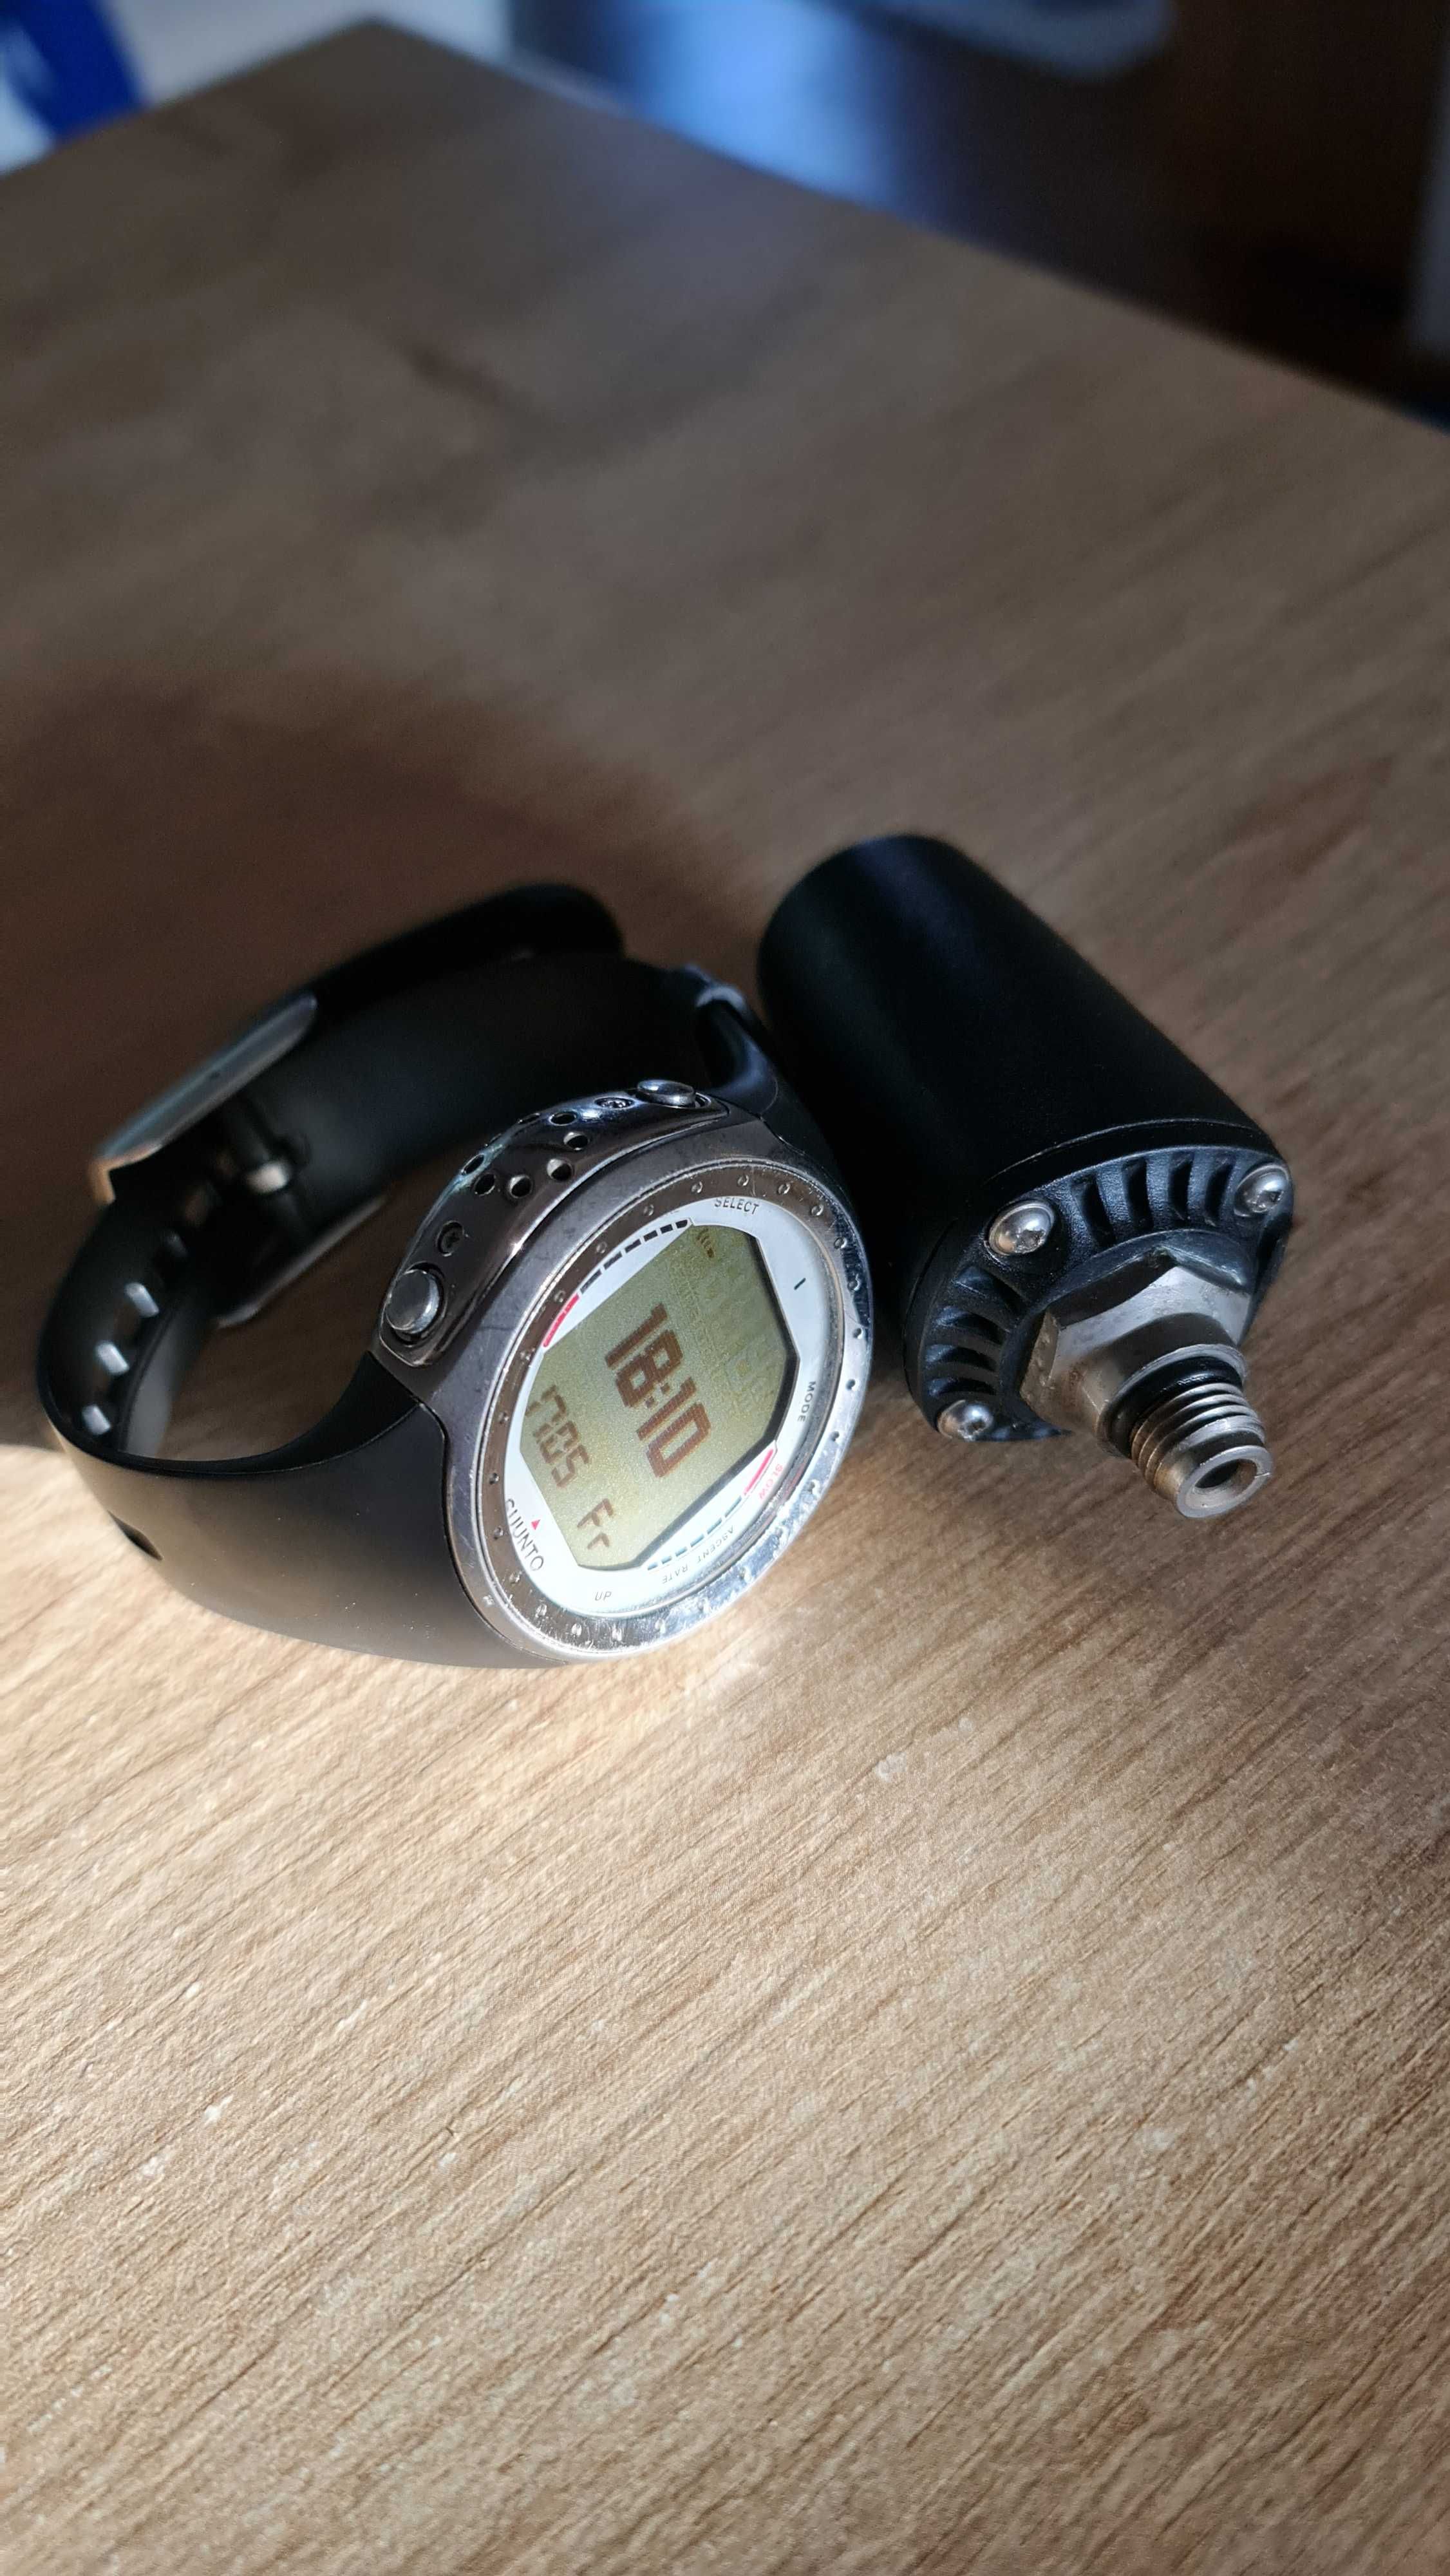 zegarek nurkowy Suunto D9 z transmiterem